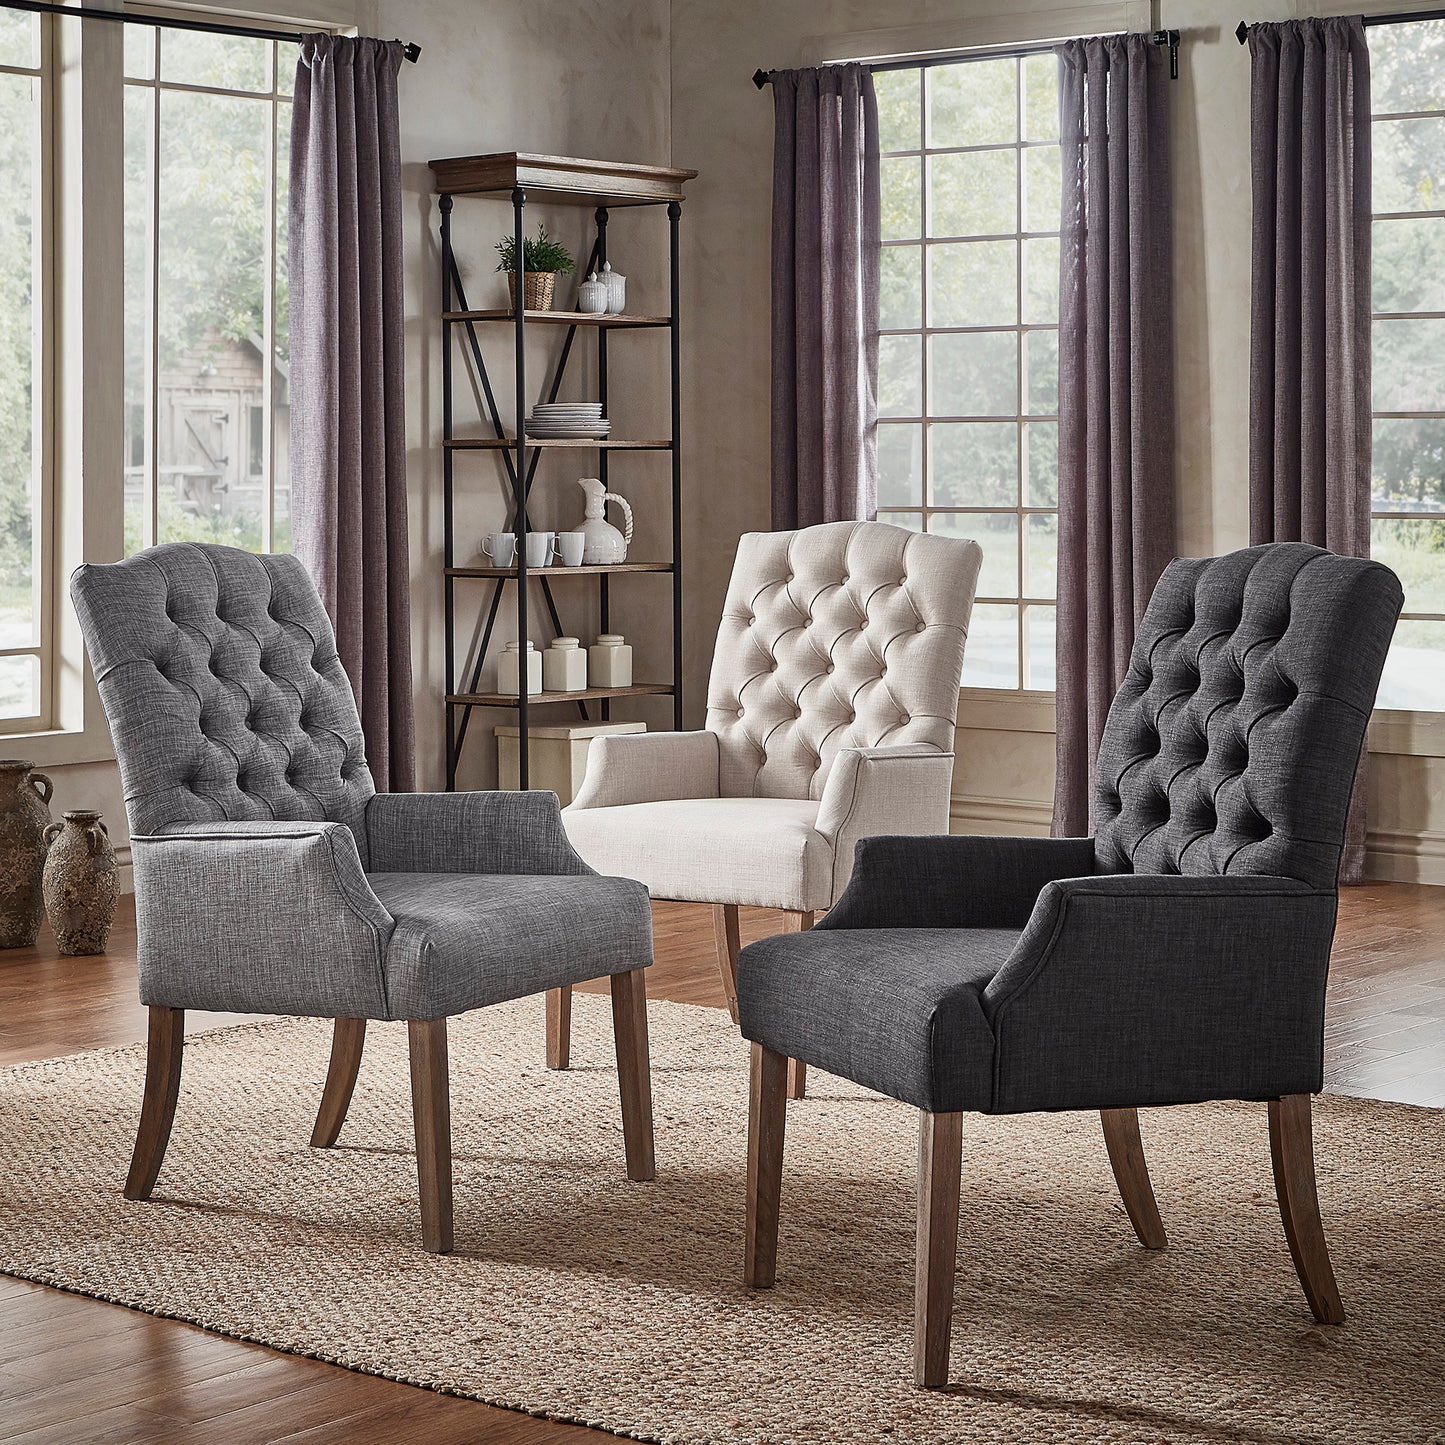 Light Distressed Natural Finish Linen Tufted Dining Chair - Dark Grey Linen